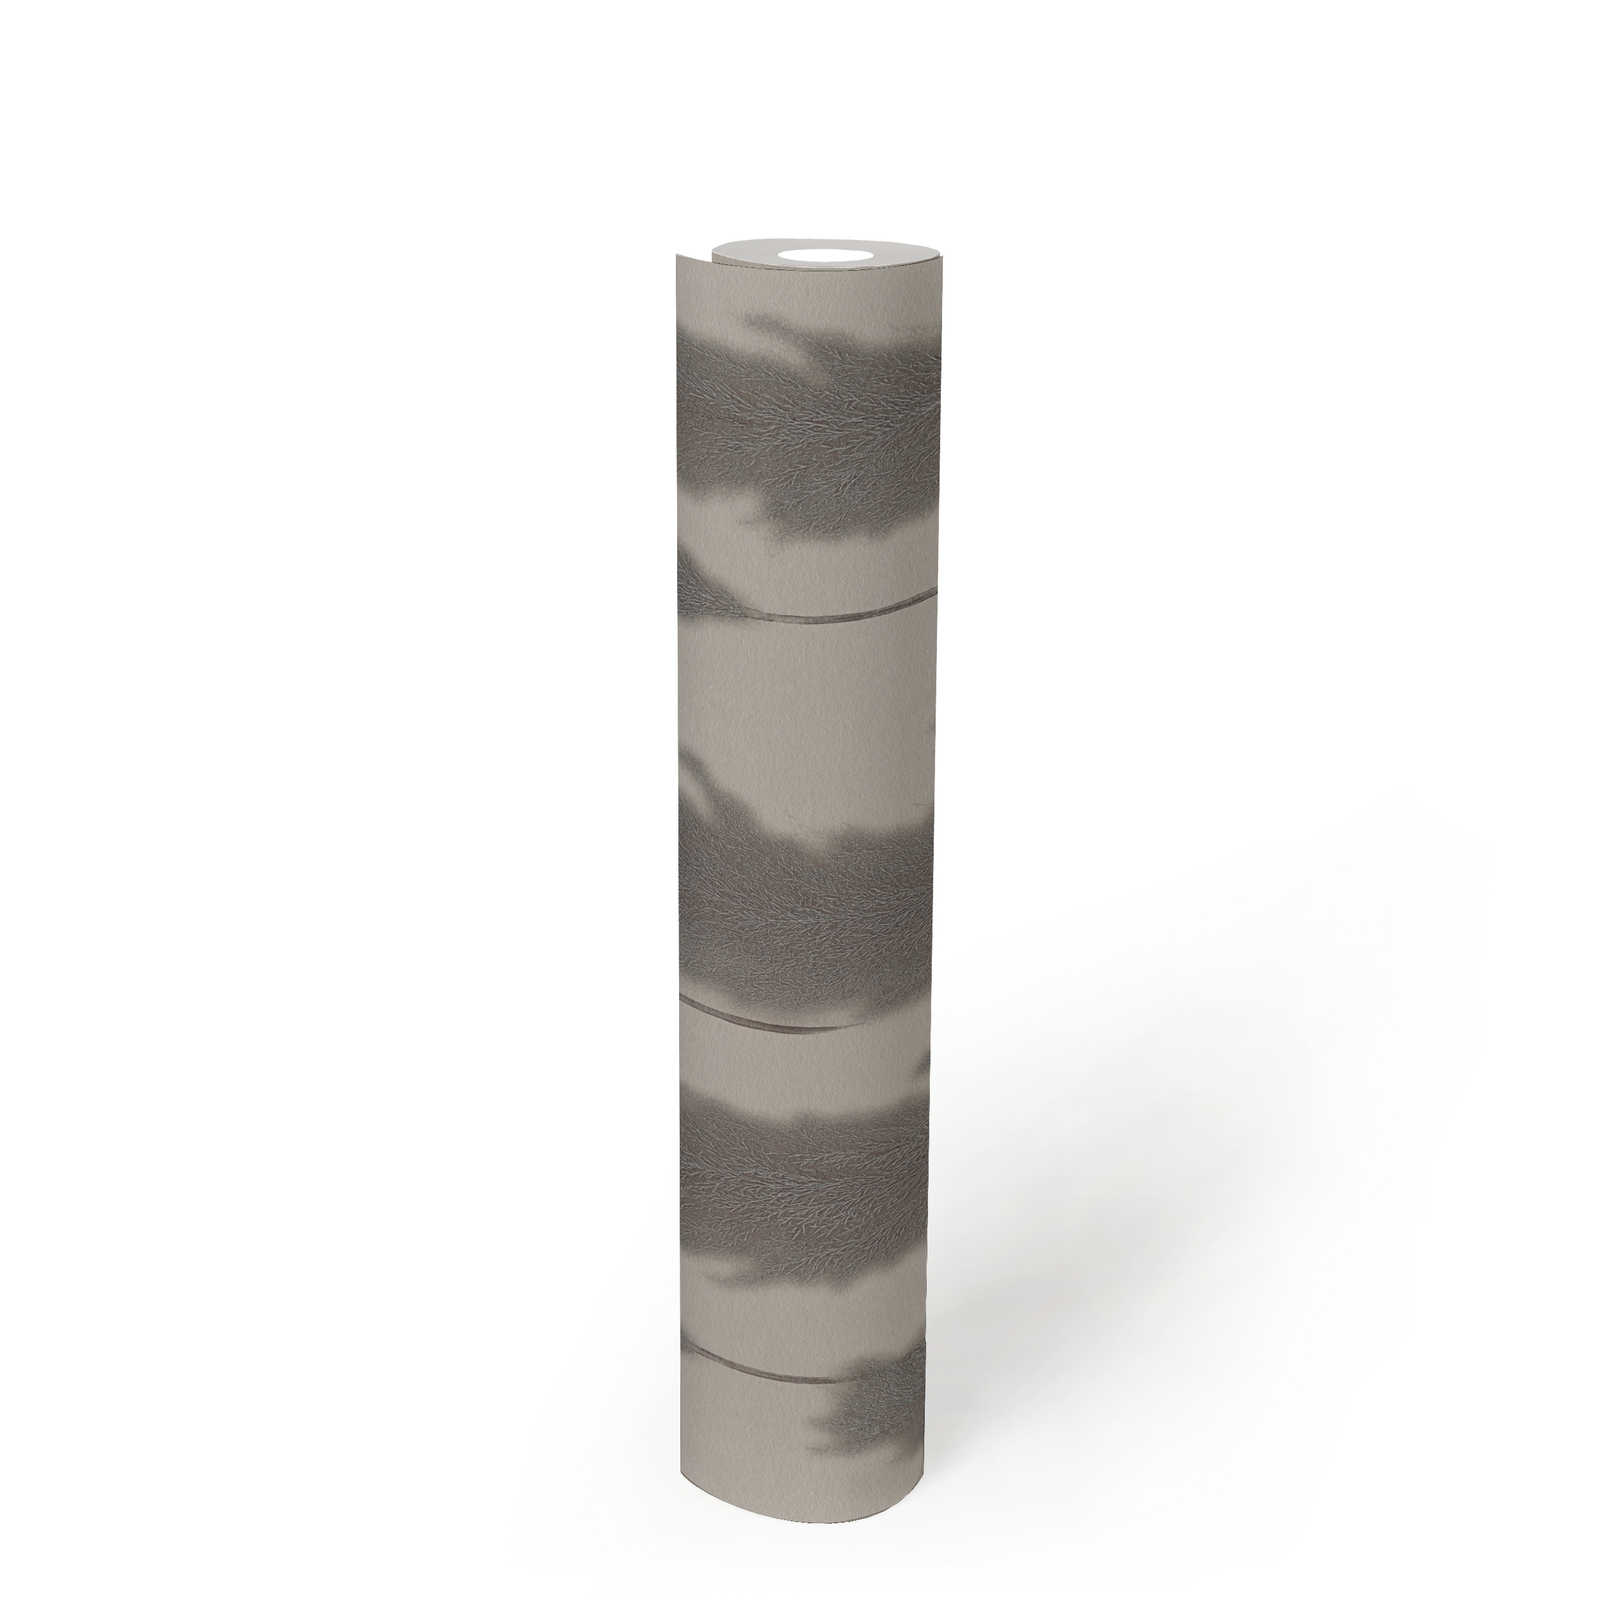             Naturdesign Tapete Pampasgras Muster – Grau, Weiß
        